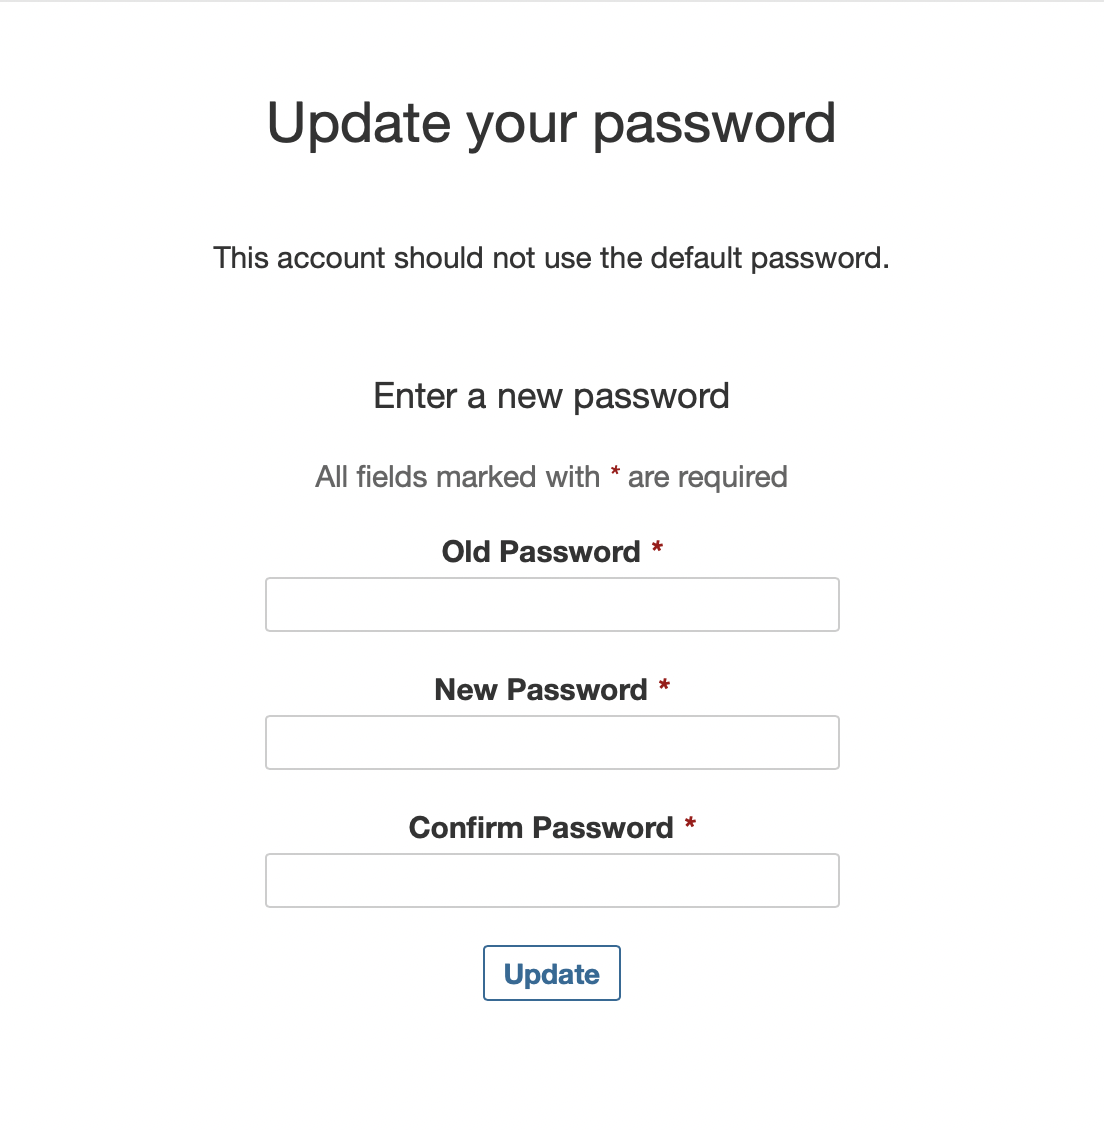 Sonarqube forced update password